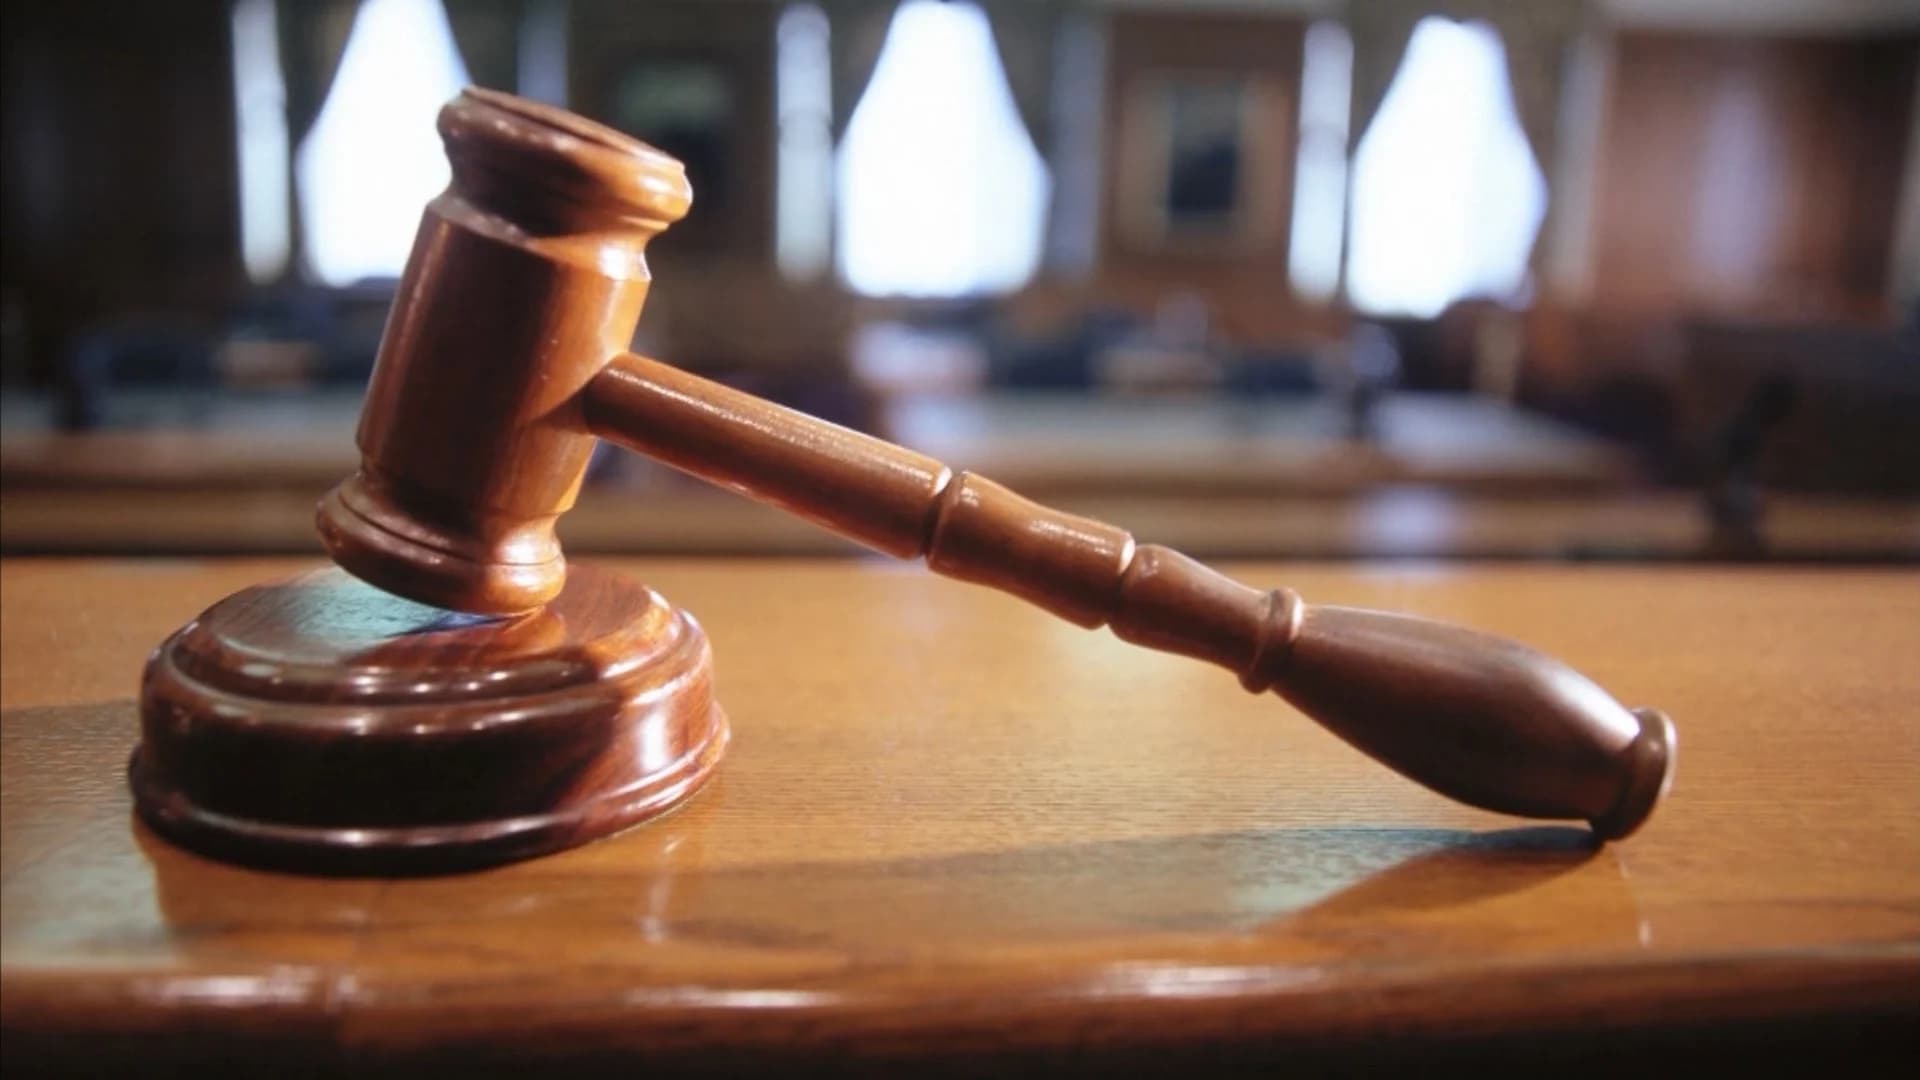 Juror's comment spurs new trial over religious bias concerns